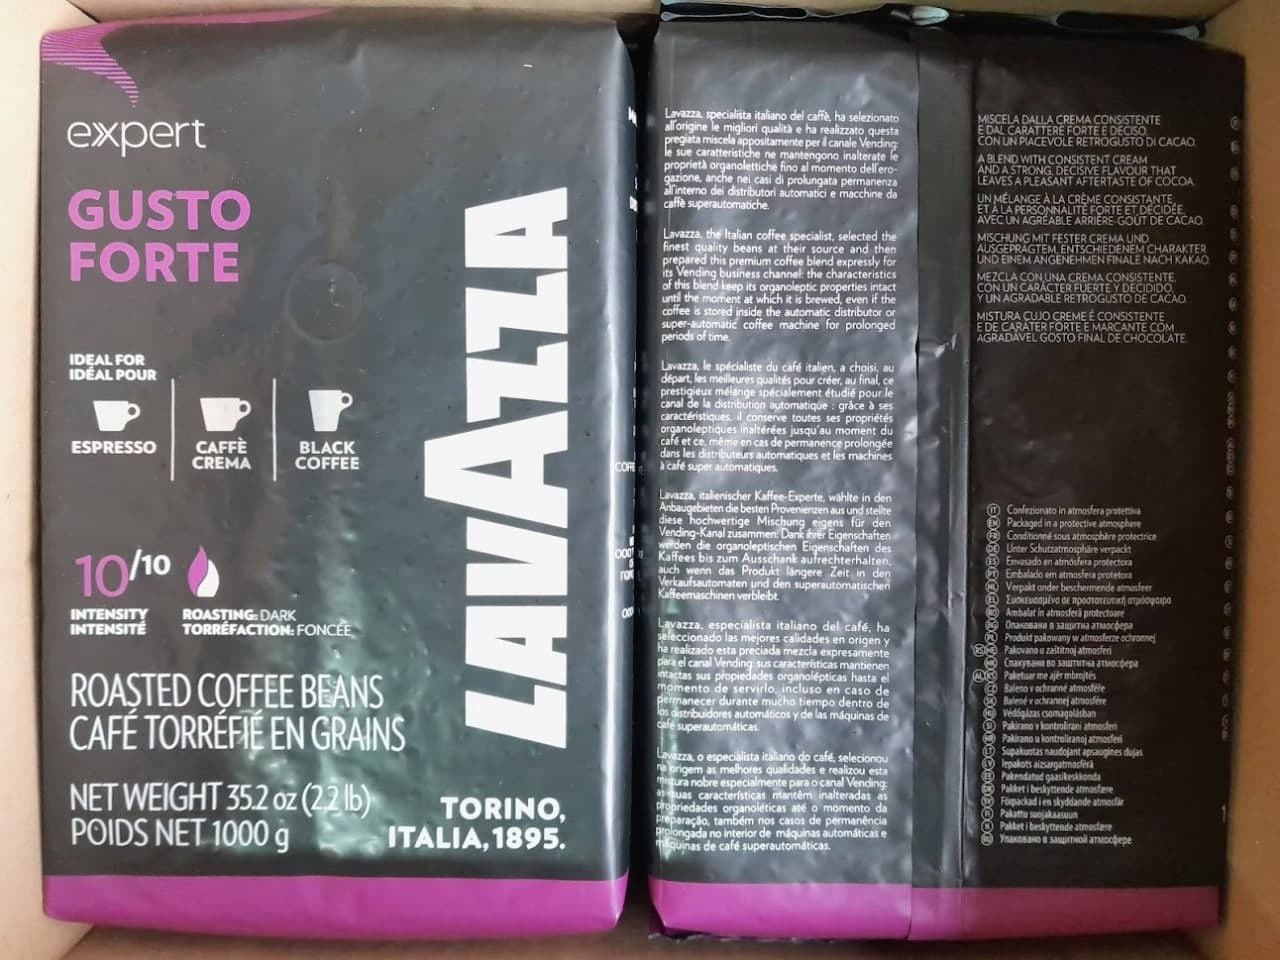 Pupiņu kafija "LAVAZZA" Expert Gusto Forte